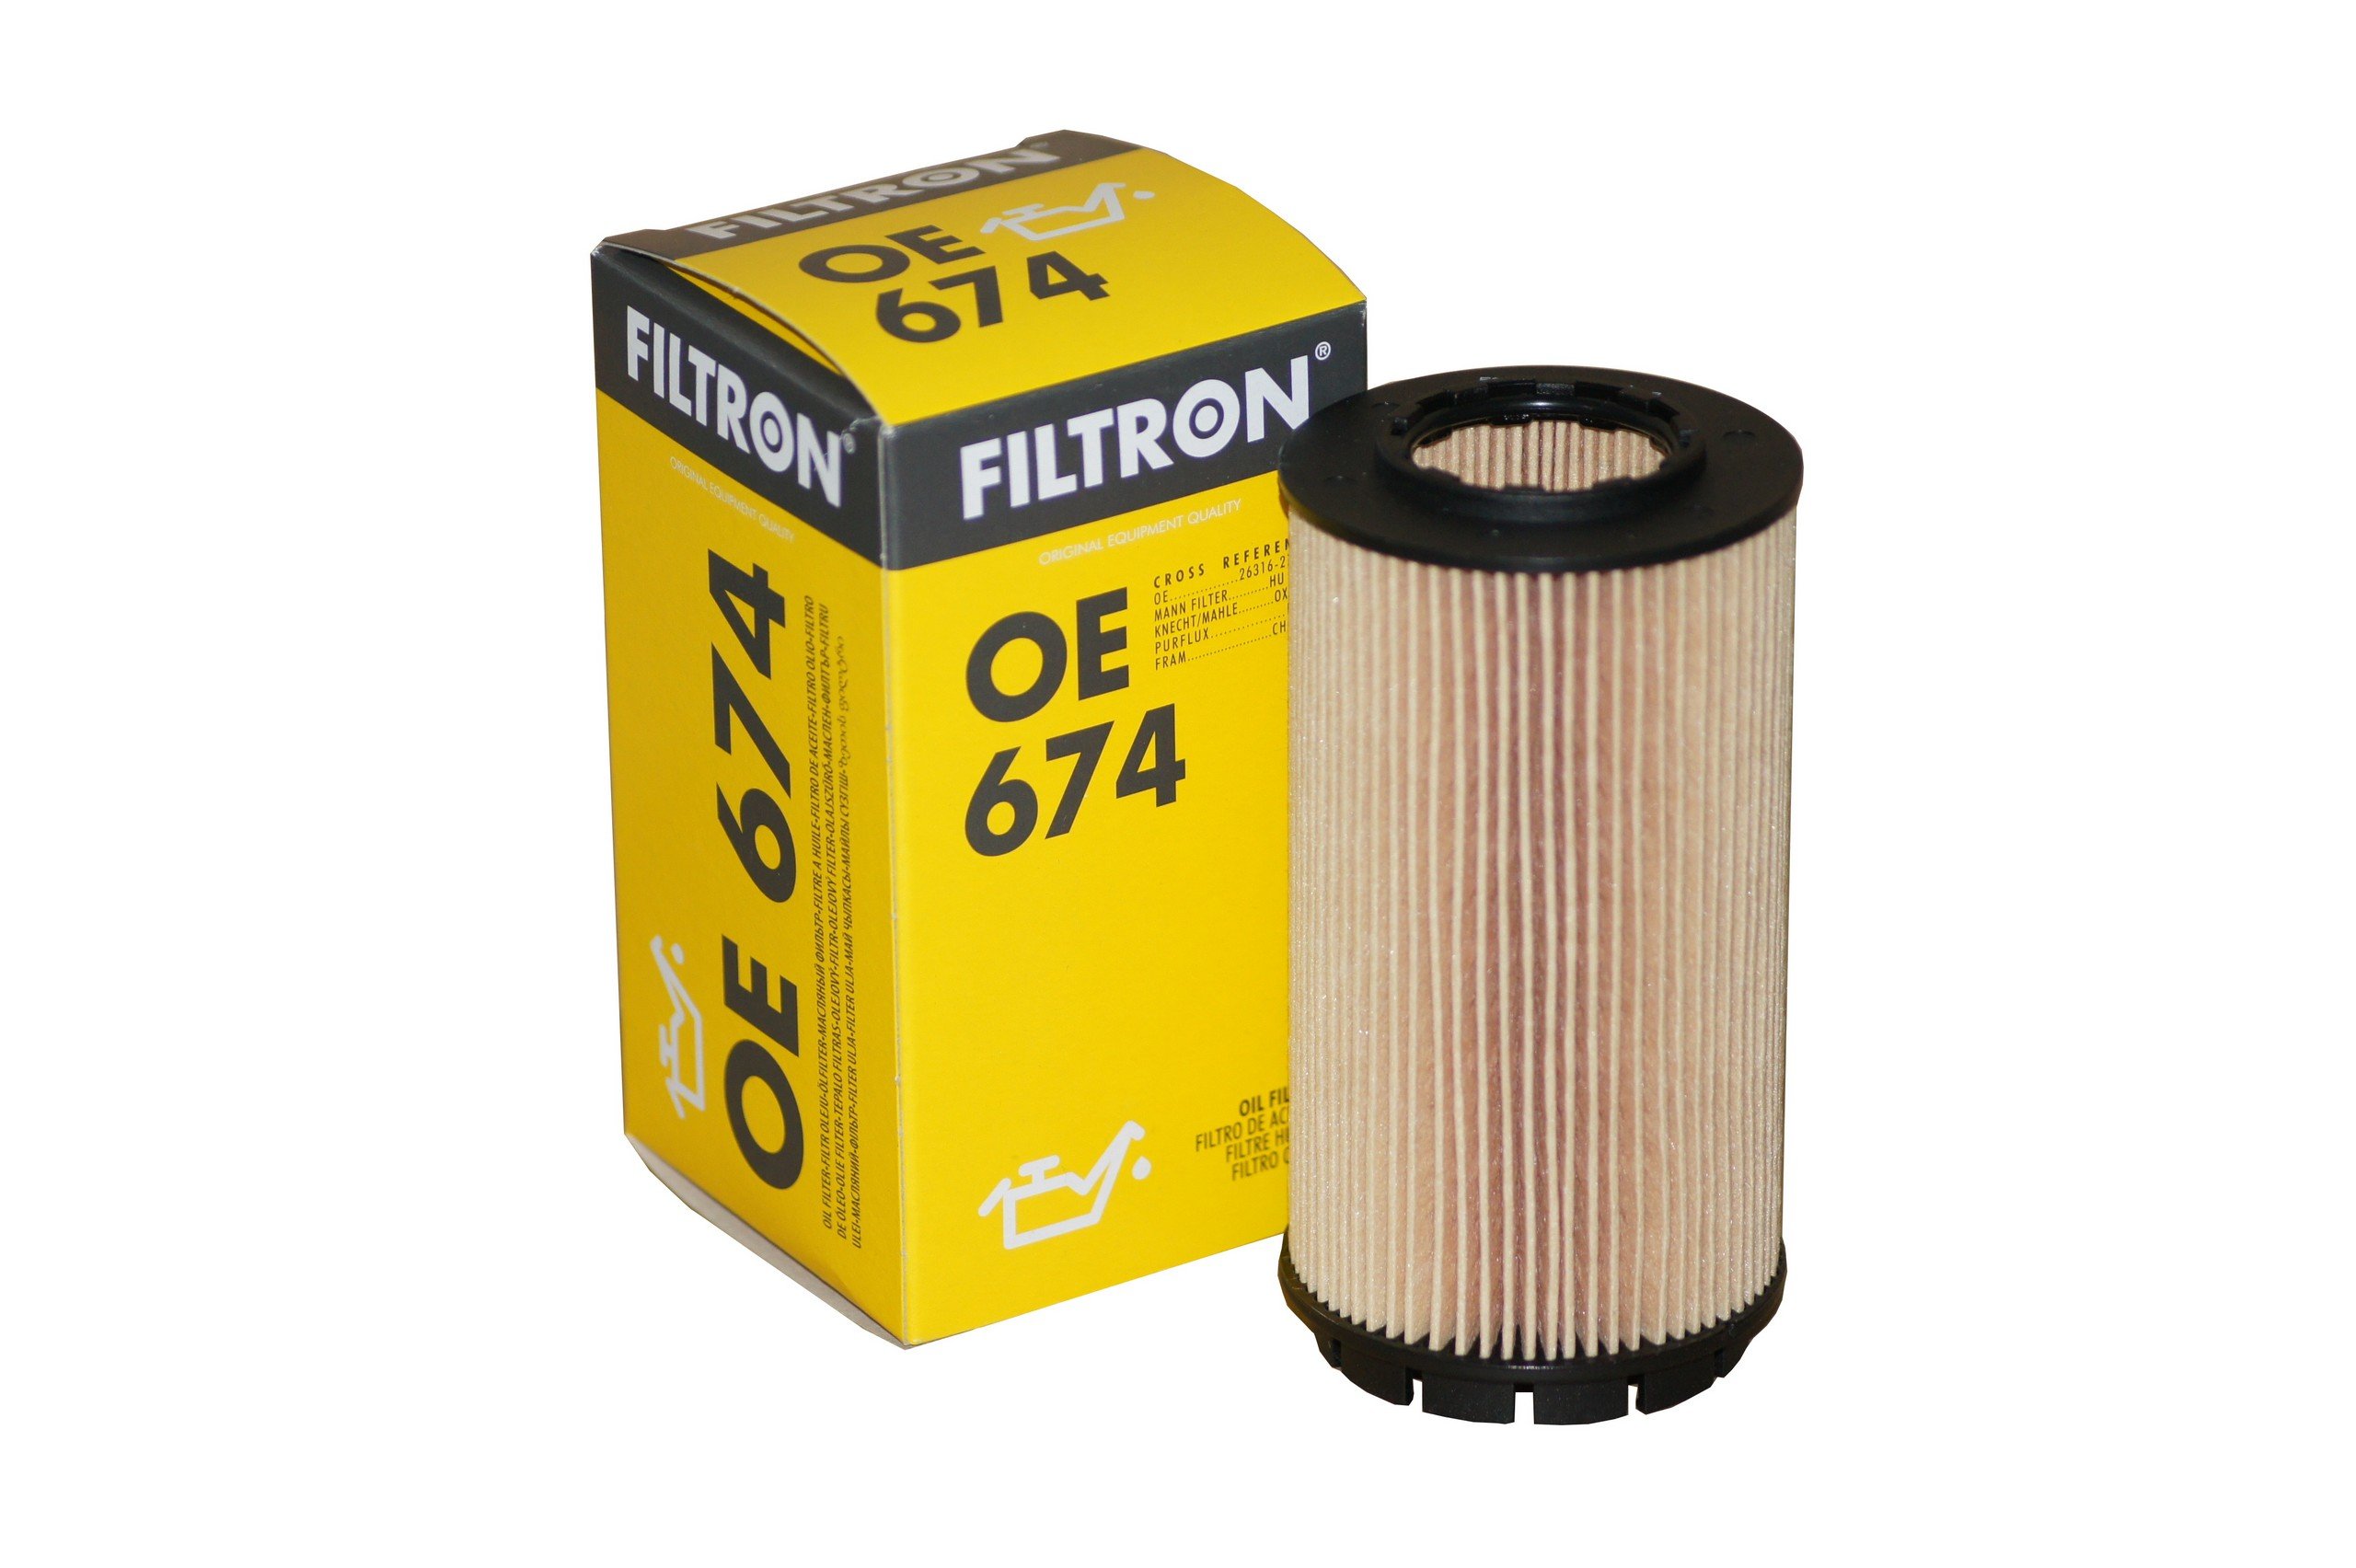 FILTRON filtr oleju OE674 Chrysler Hyundai KIA 6590474411